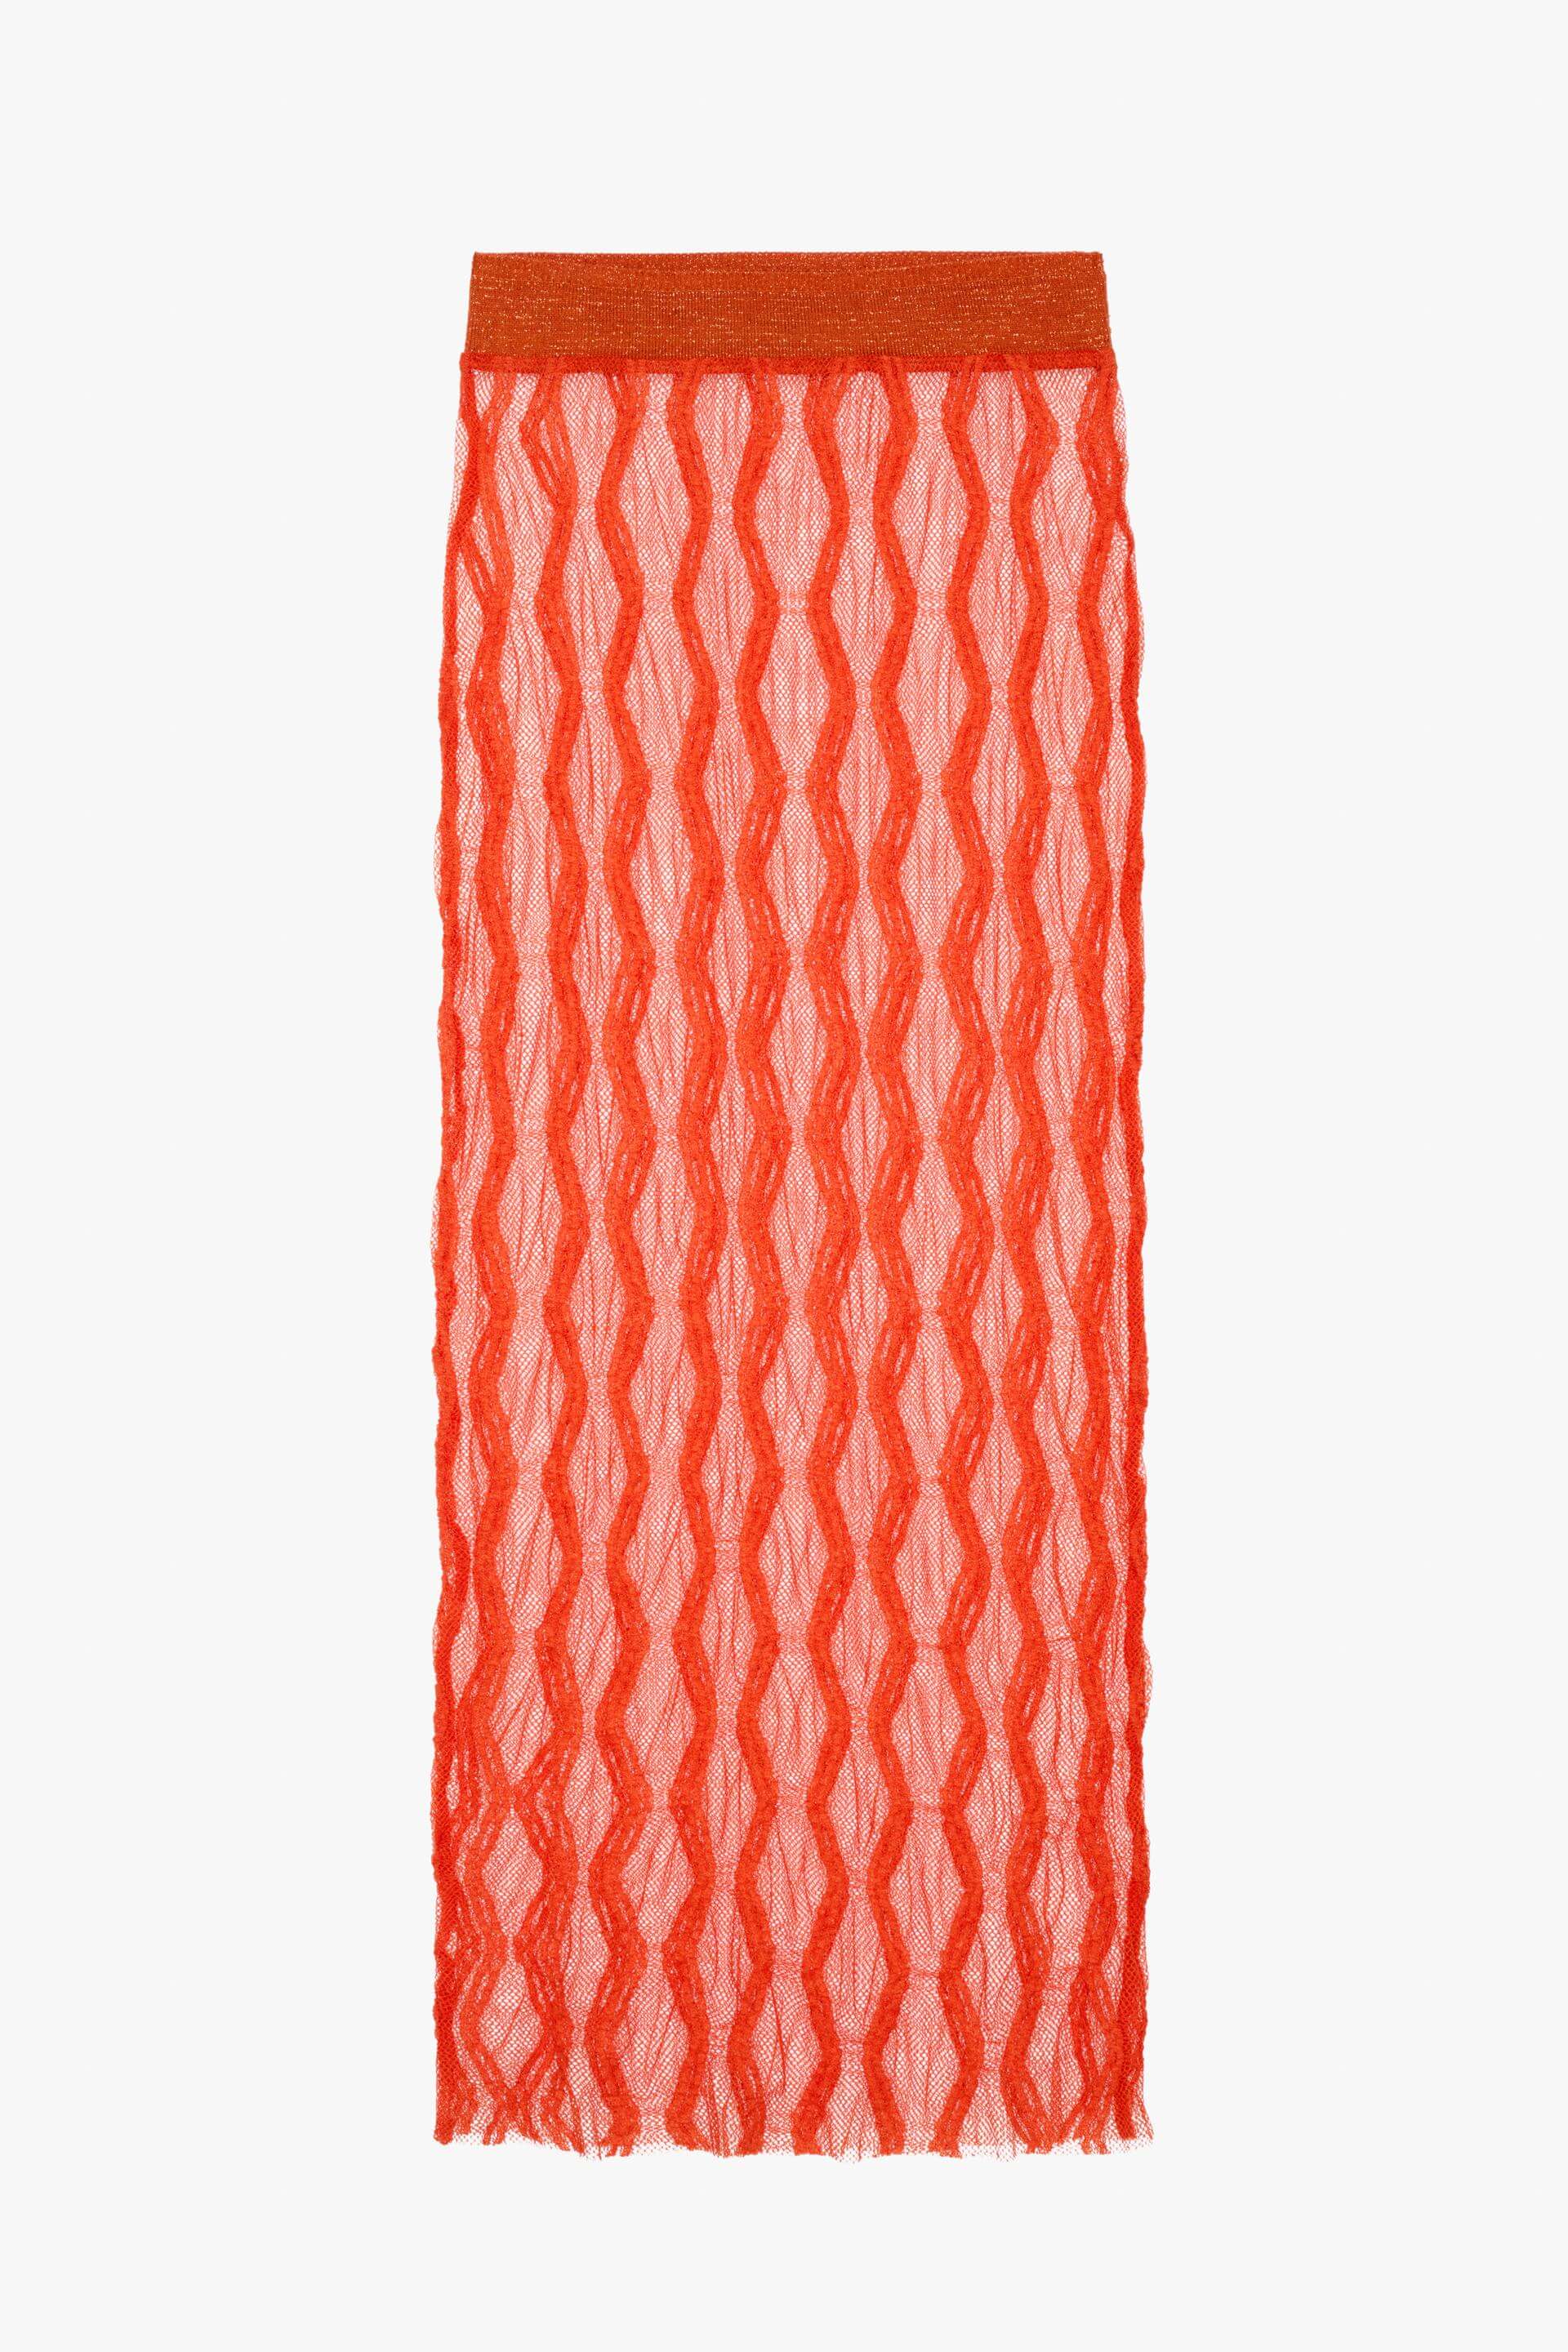 Юбка Zara Knit - Limited Edition, оранжевый юбка zara knit limited edition оранжевый